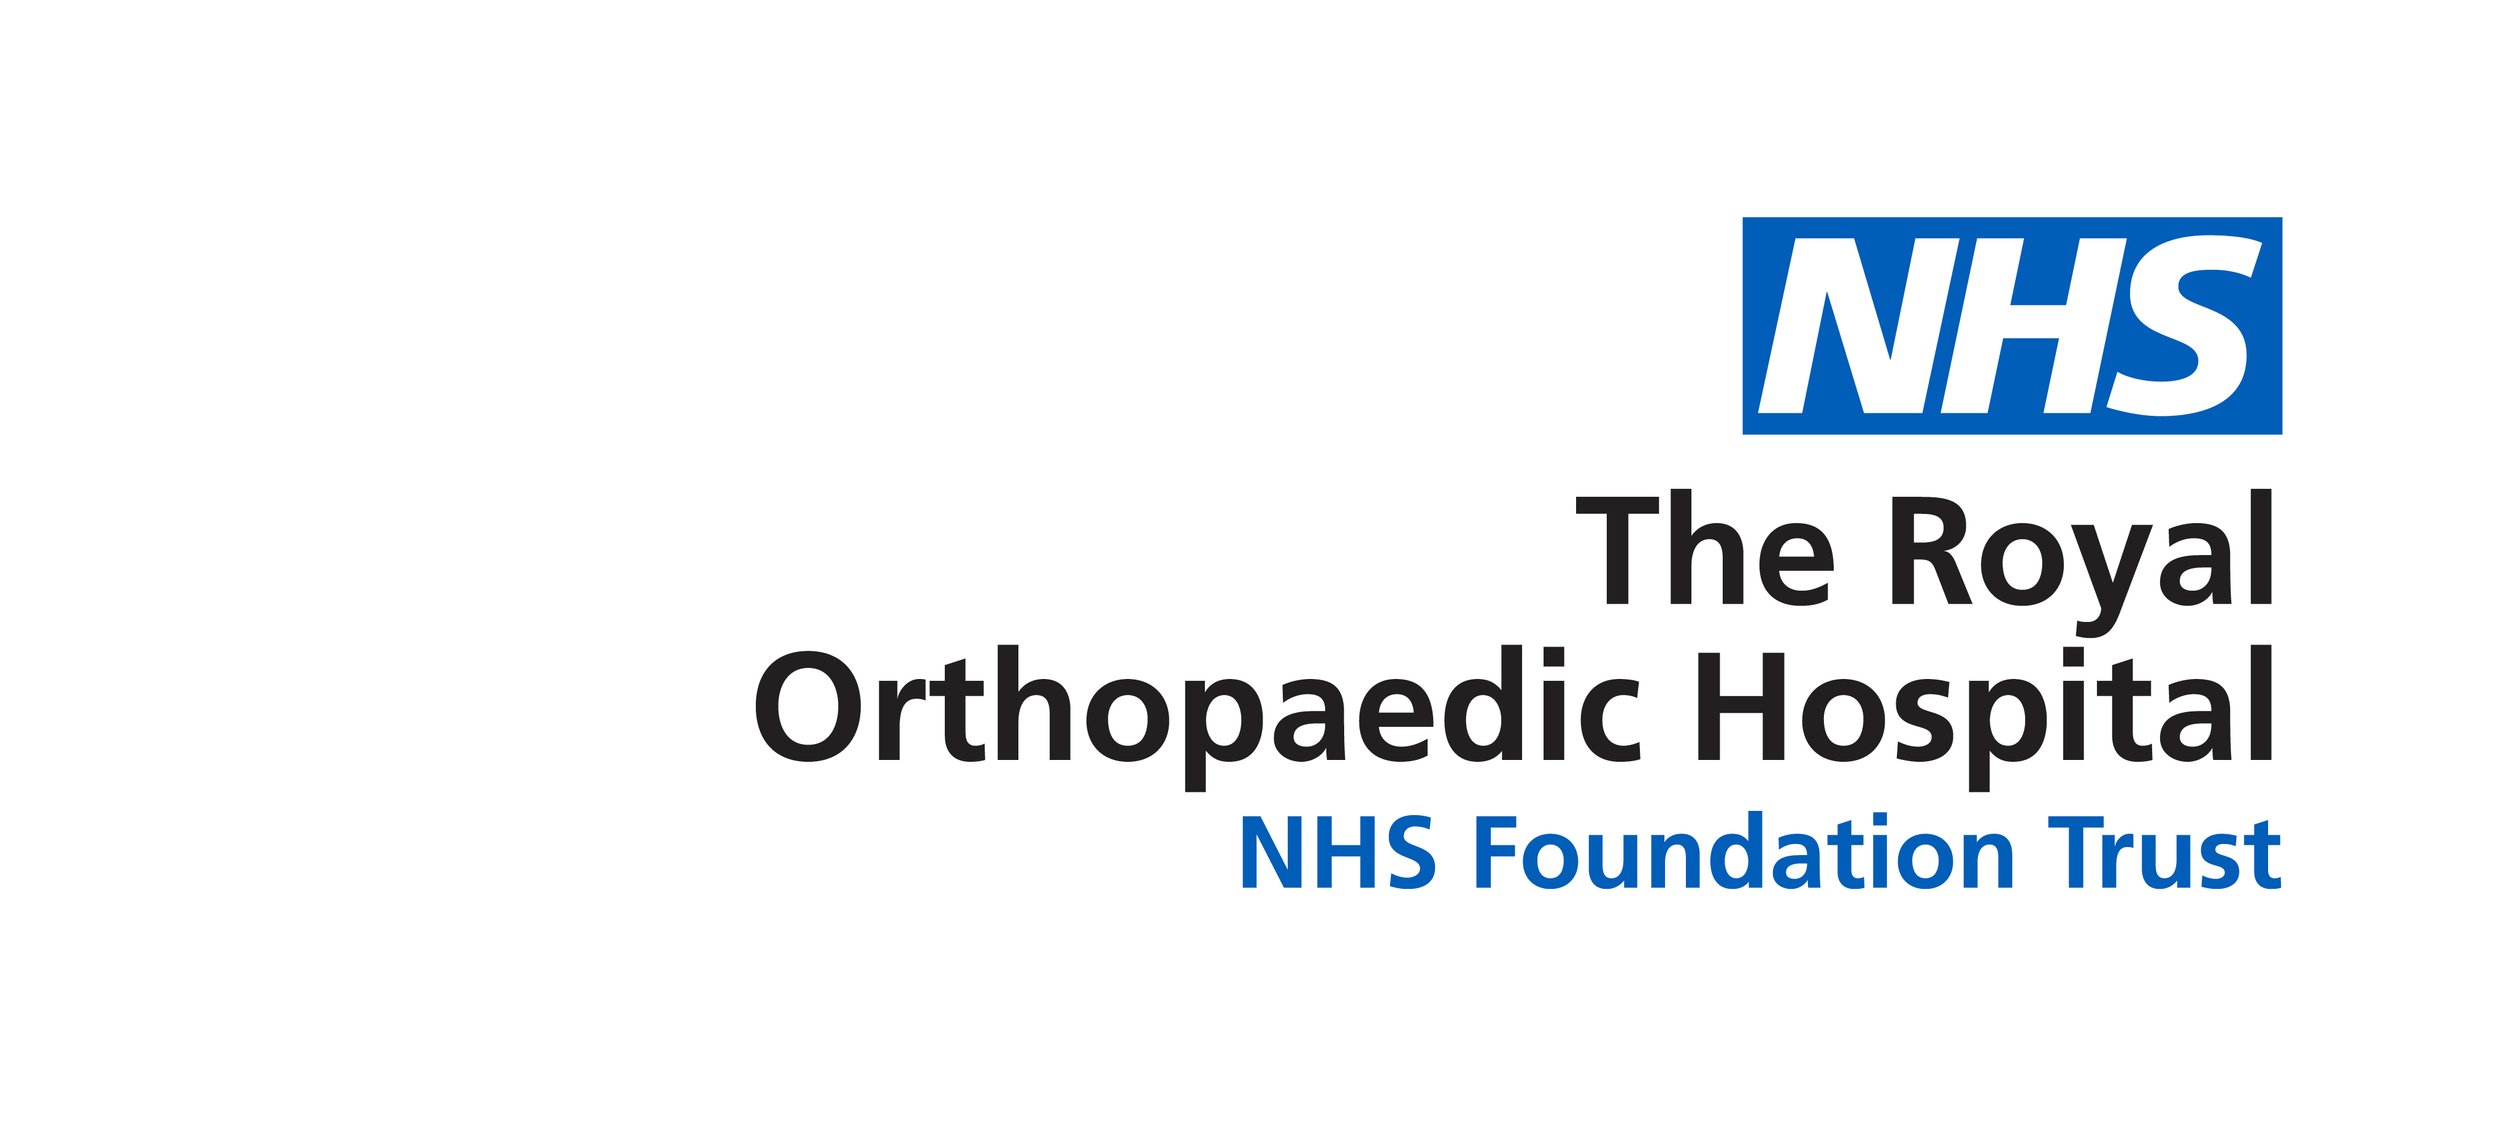 The Royal Orthopaedic Hospital